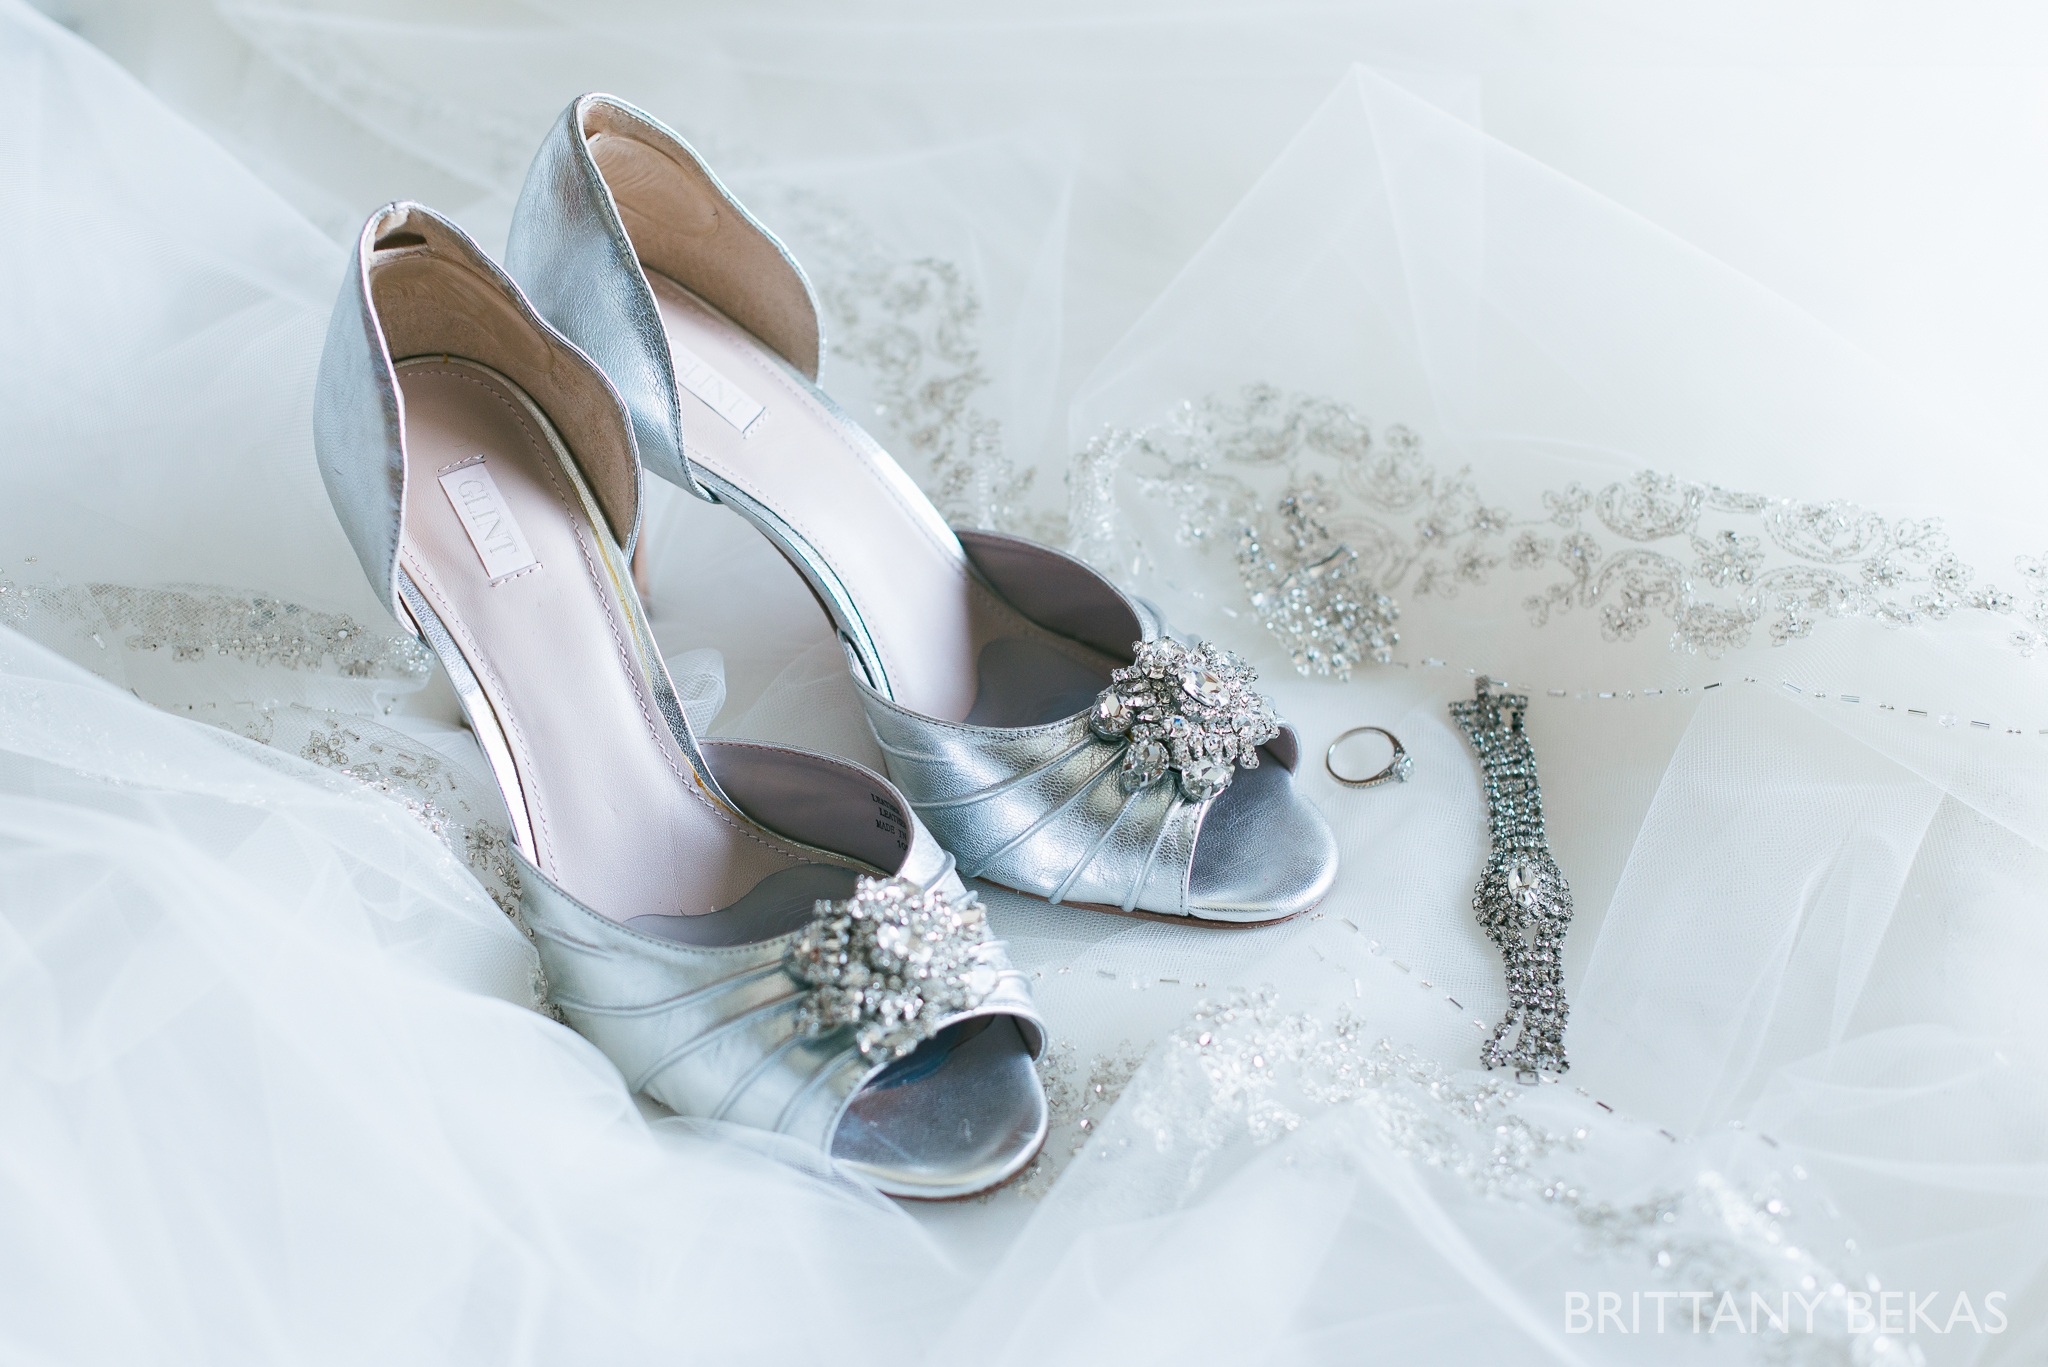 Patrick Haley Mansion Wedding - Brittany Bekas Photography_0001